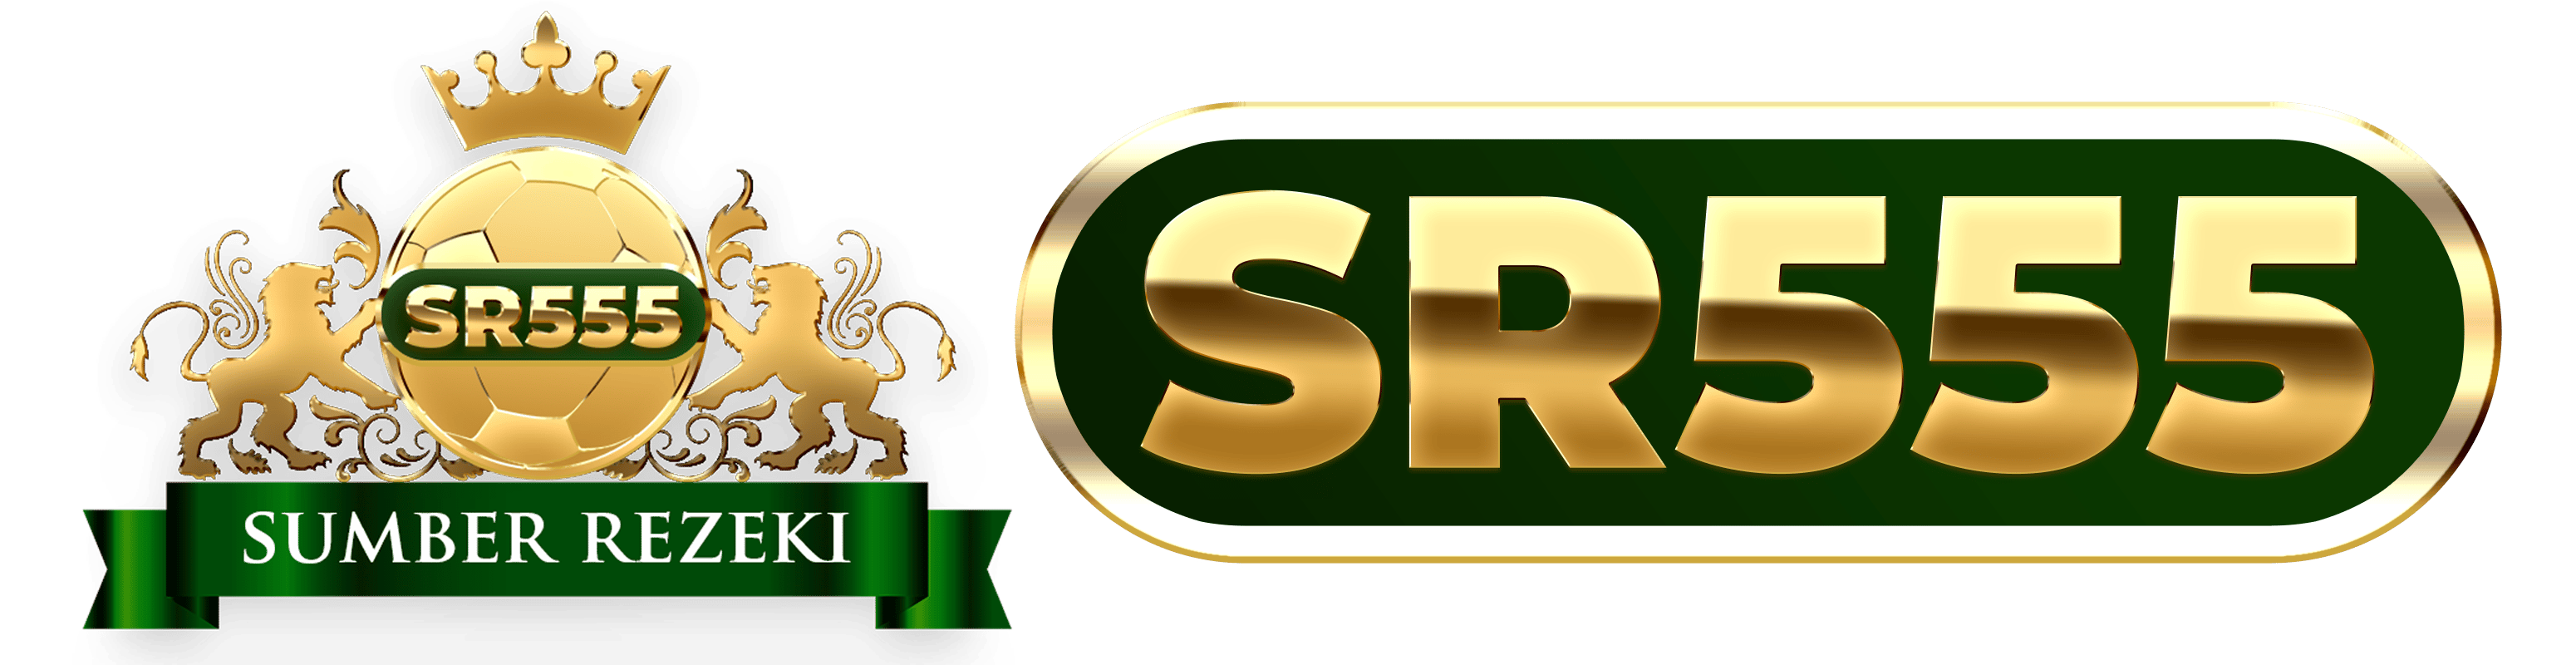 logo-SR555